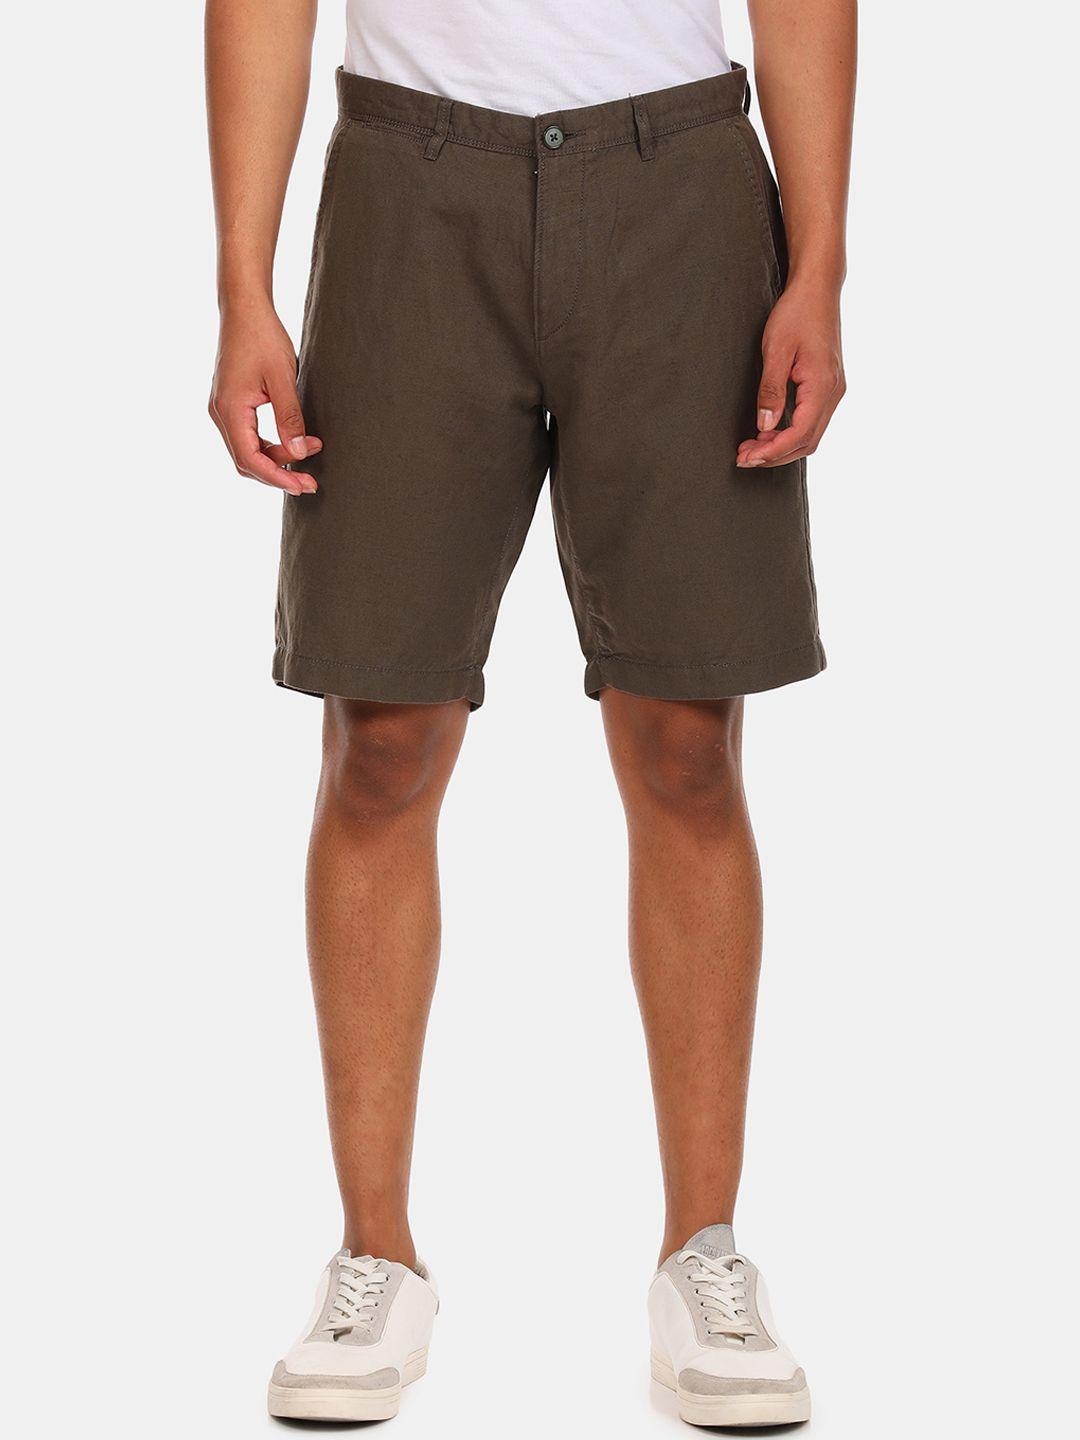 u-s-polo-assn-men-olive-green-mid-rise-regular-shorts